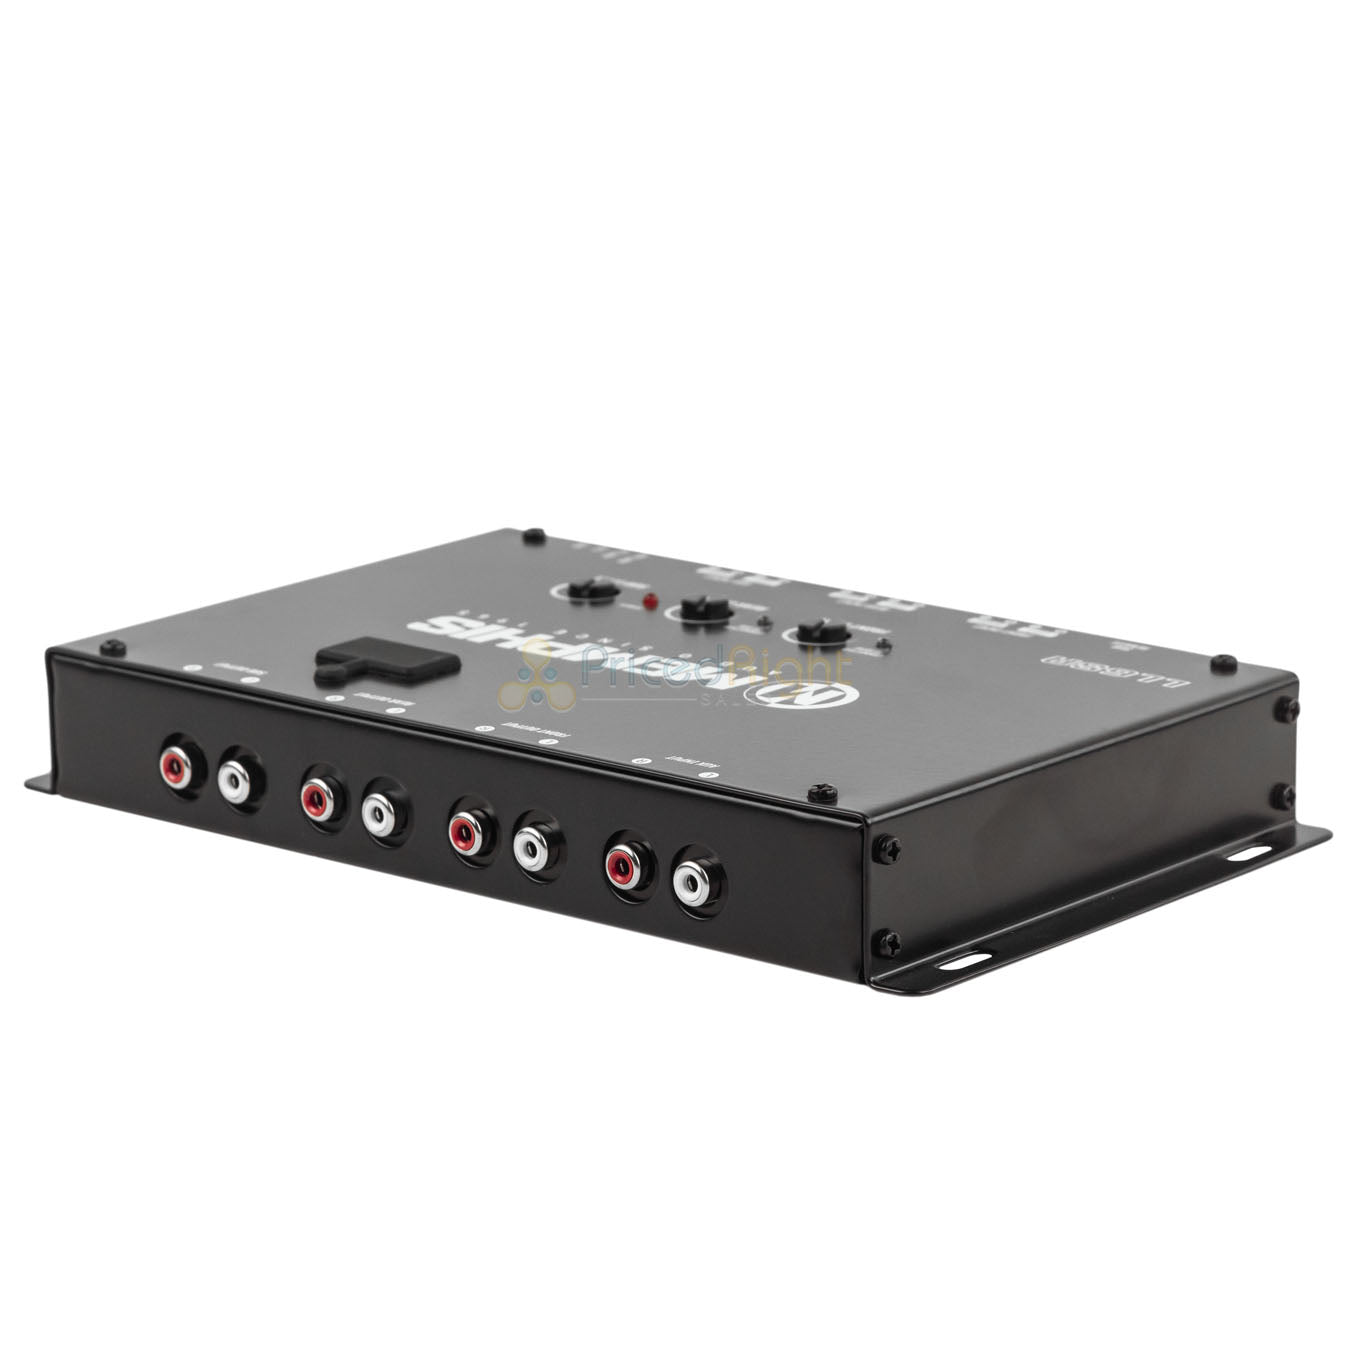 Memphis Audio 6-Channel Line Level Adapter AUX Input Car Audio OEM LL6SA